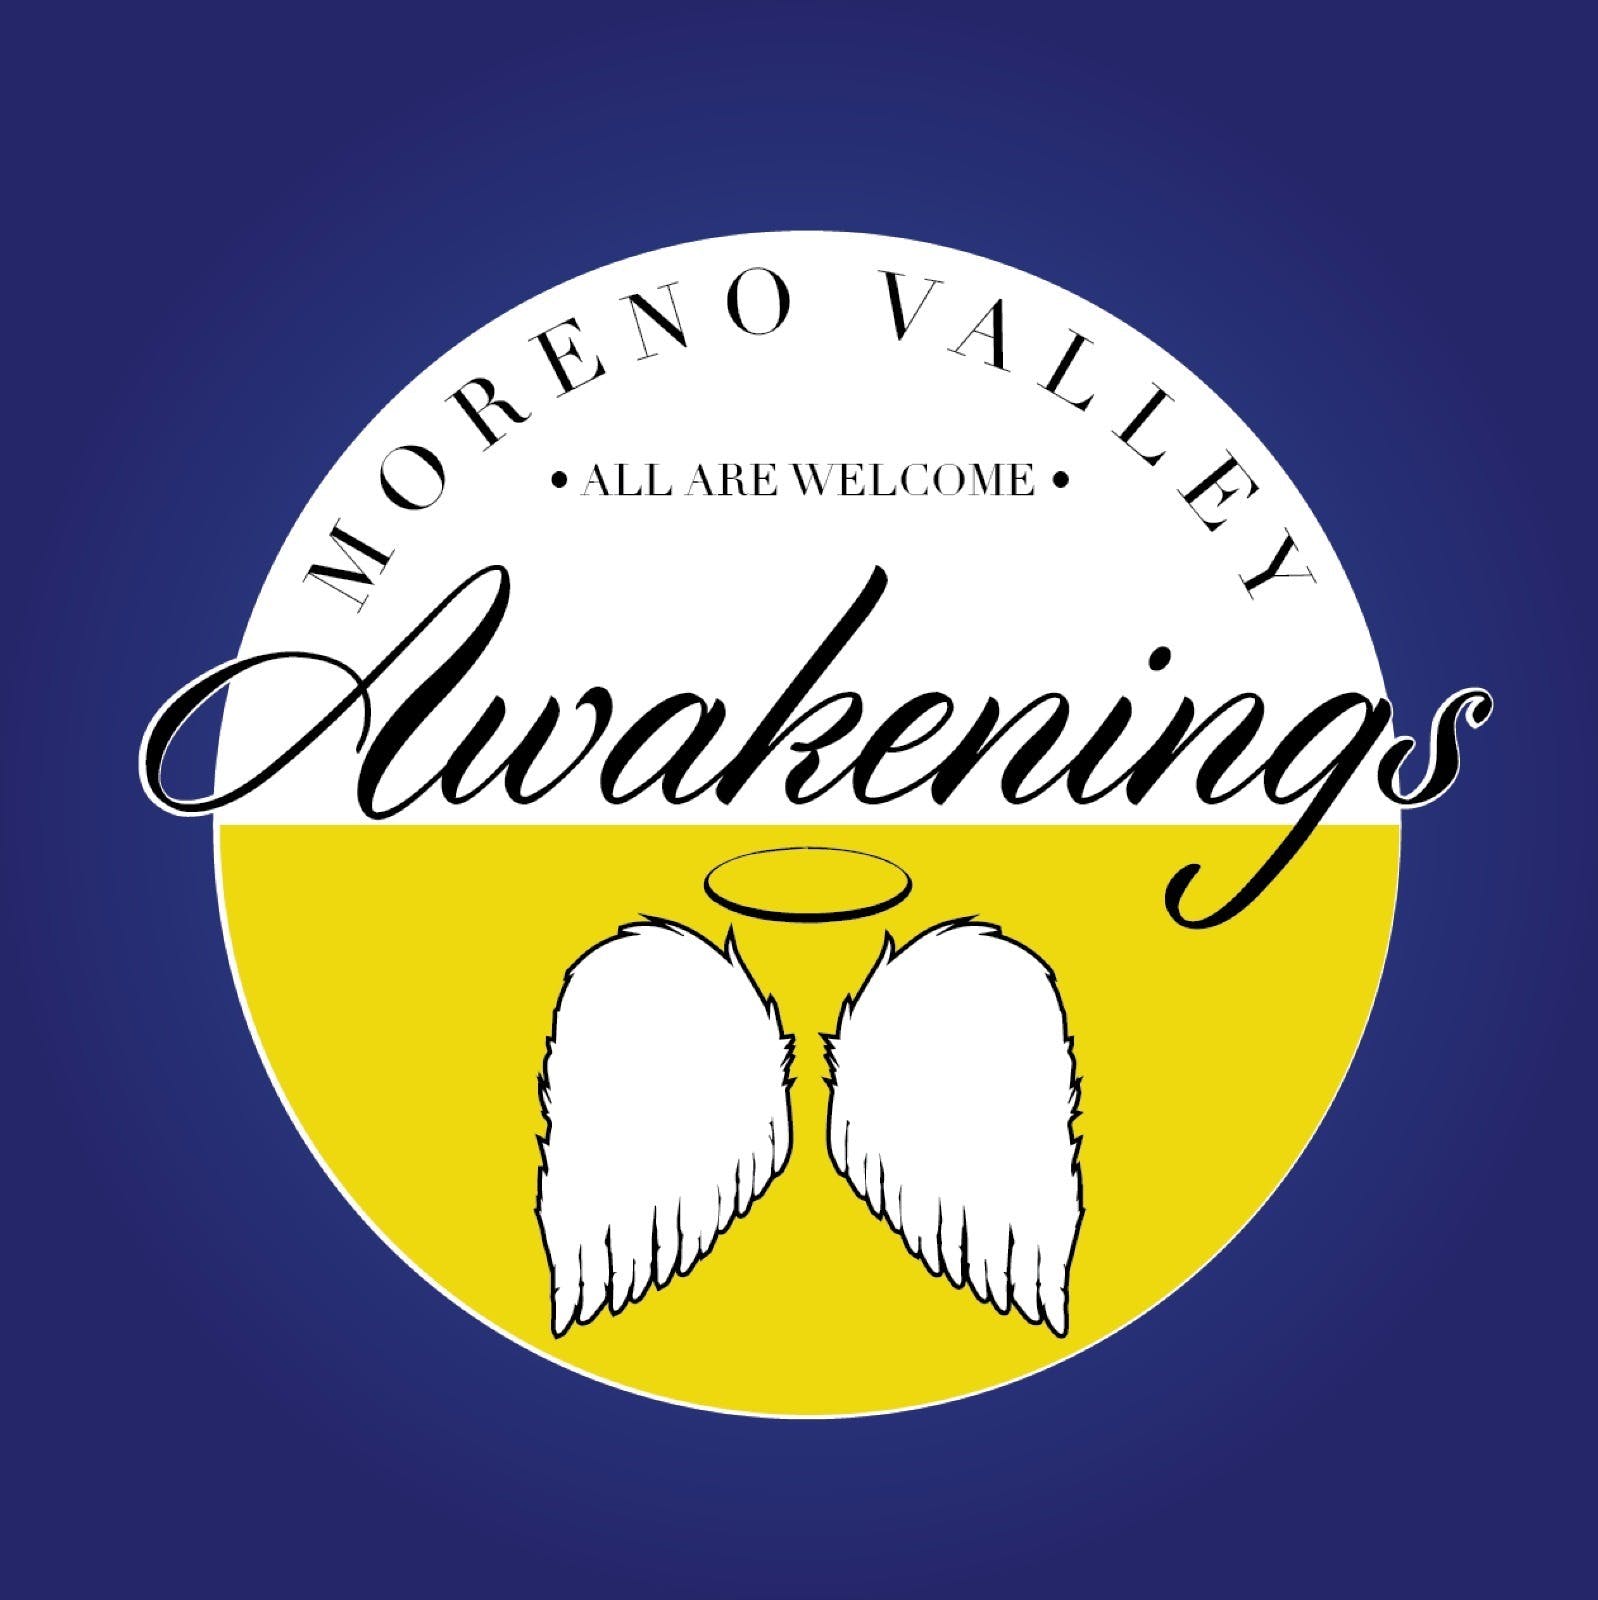 Moreno Valley Awakenings - Medical Marijuana Doctors - Cannabizme.com